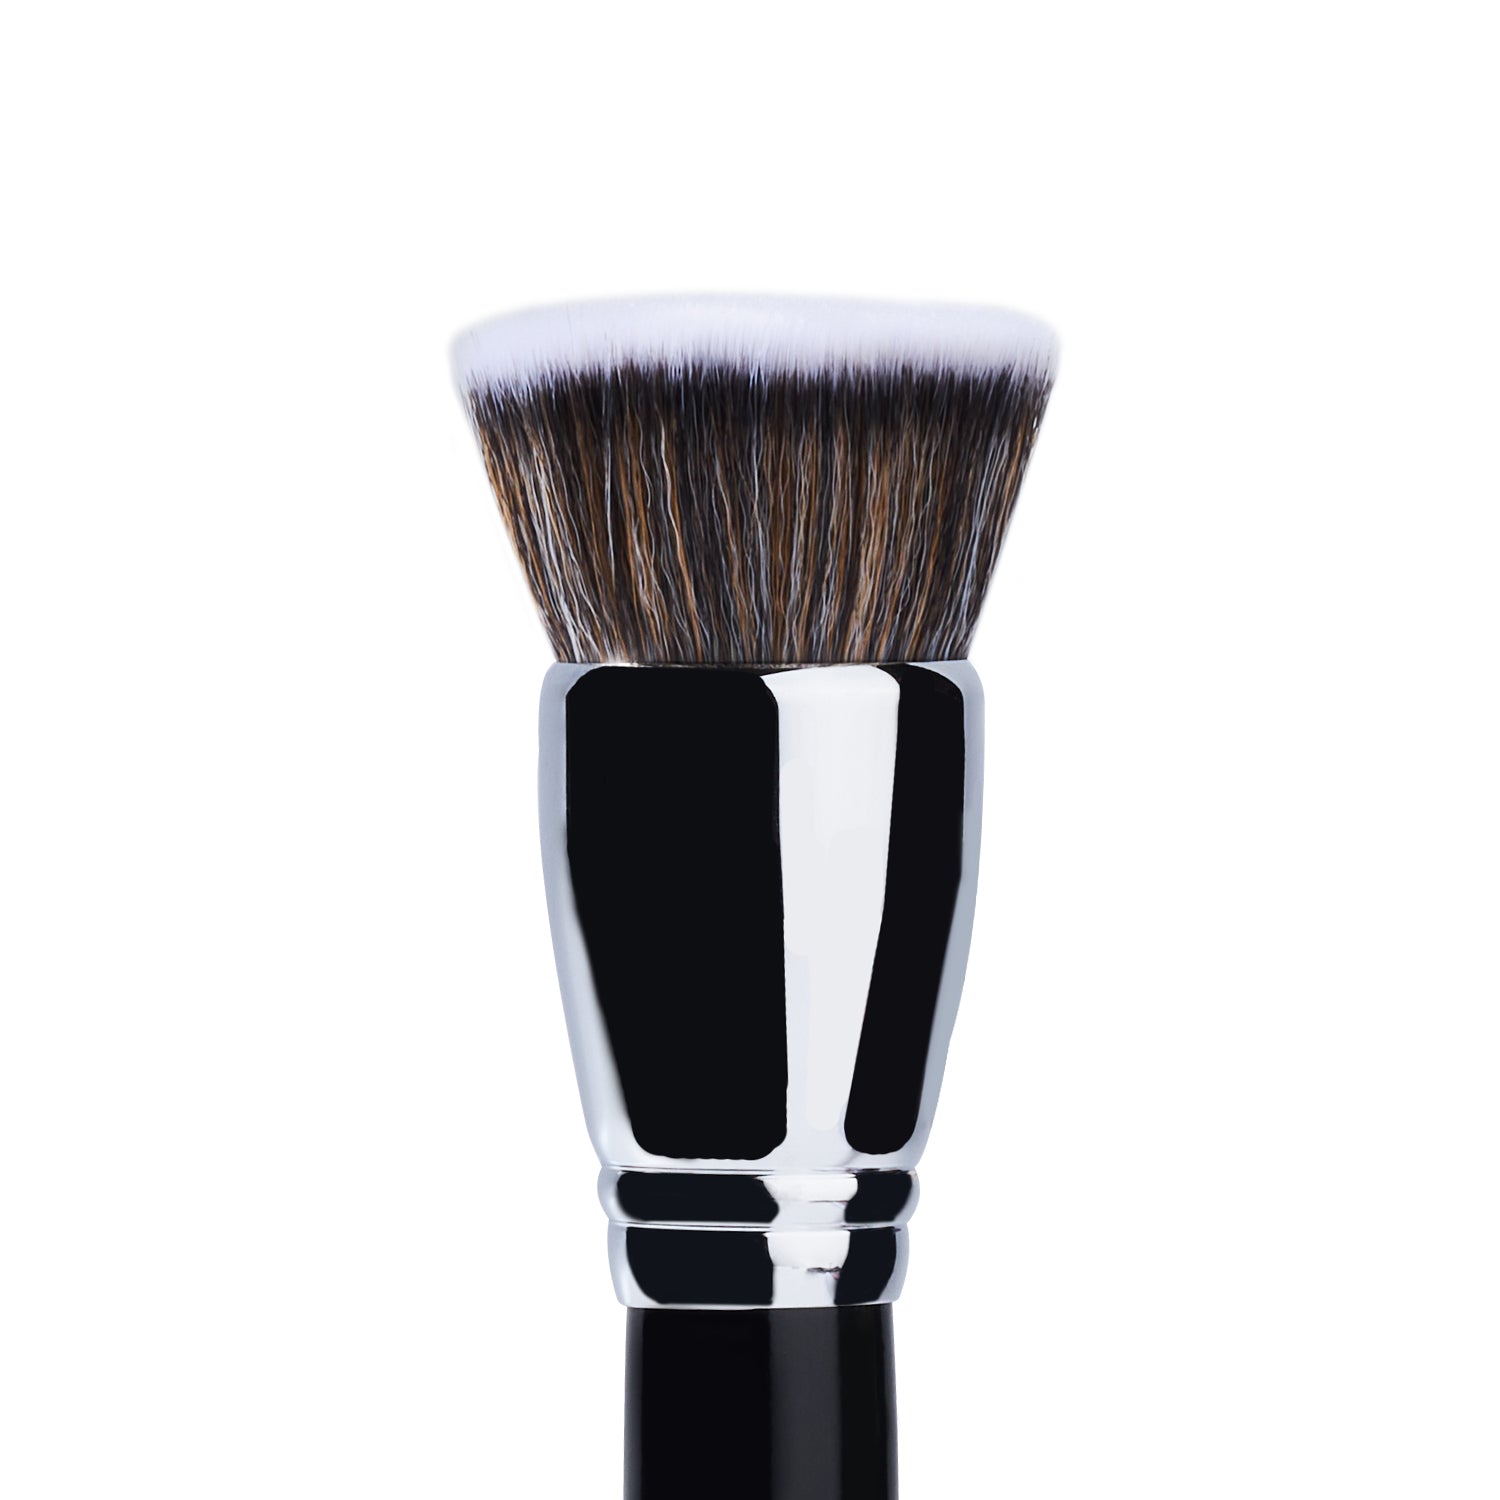 PAC Cosmetics Foundation Blending Brush 252